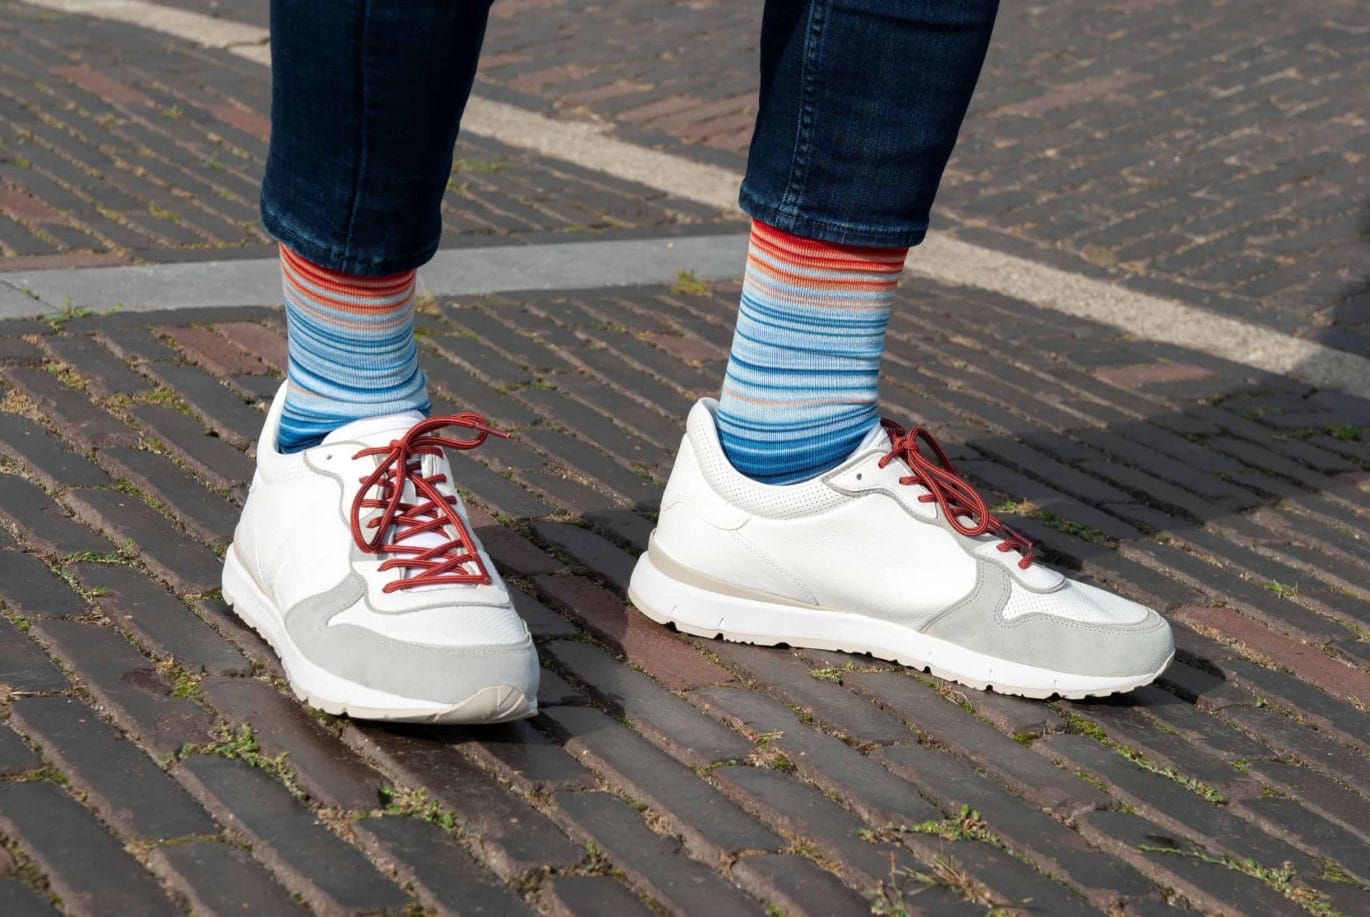 Effio Warming Stripes Socks